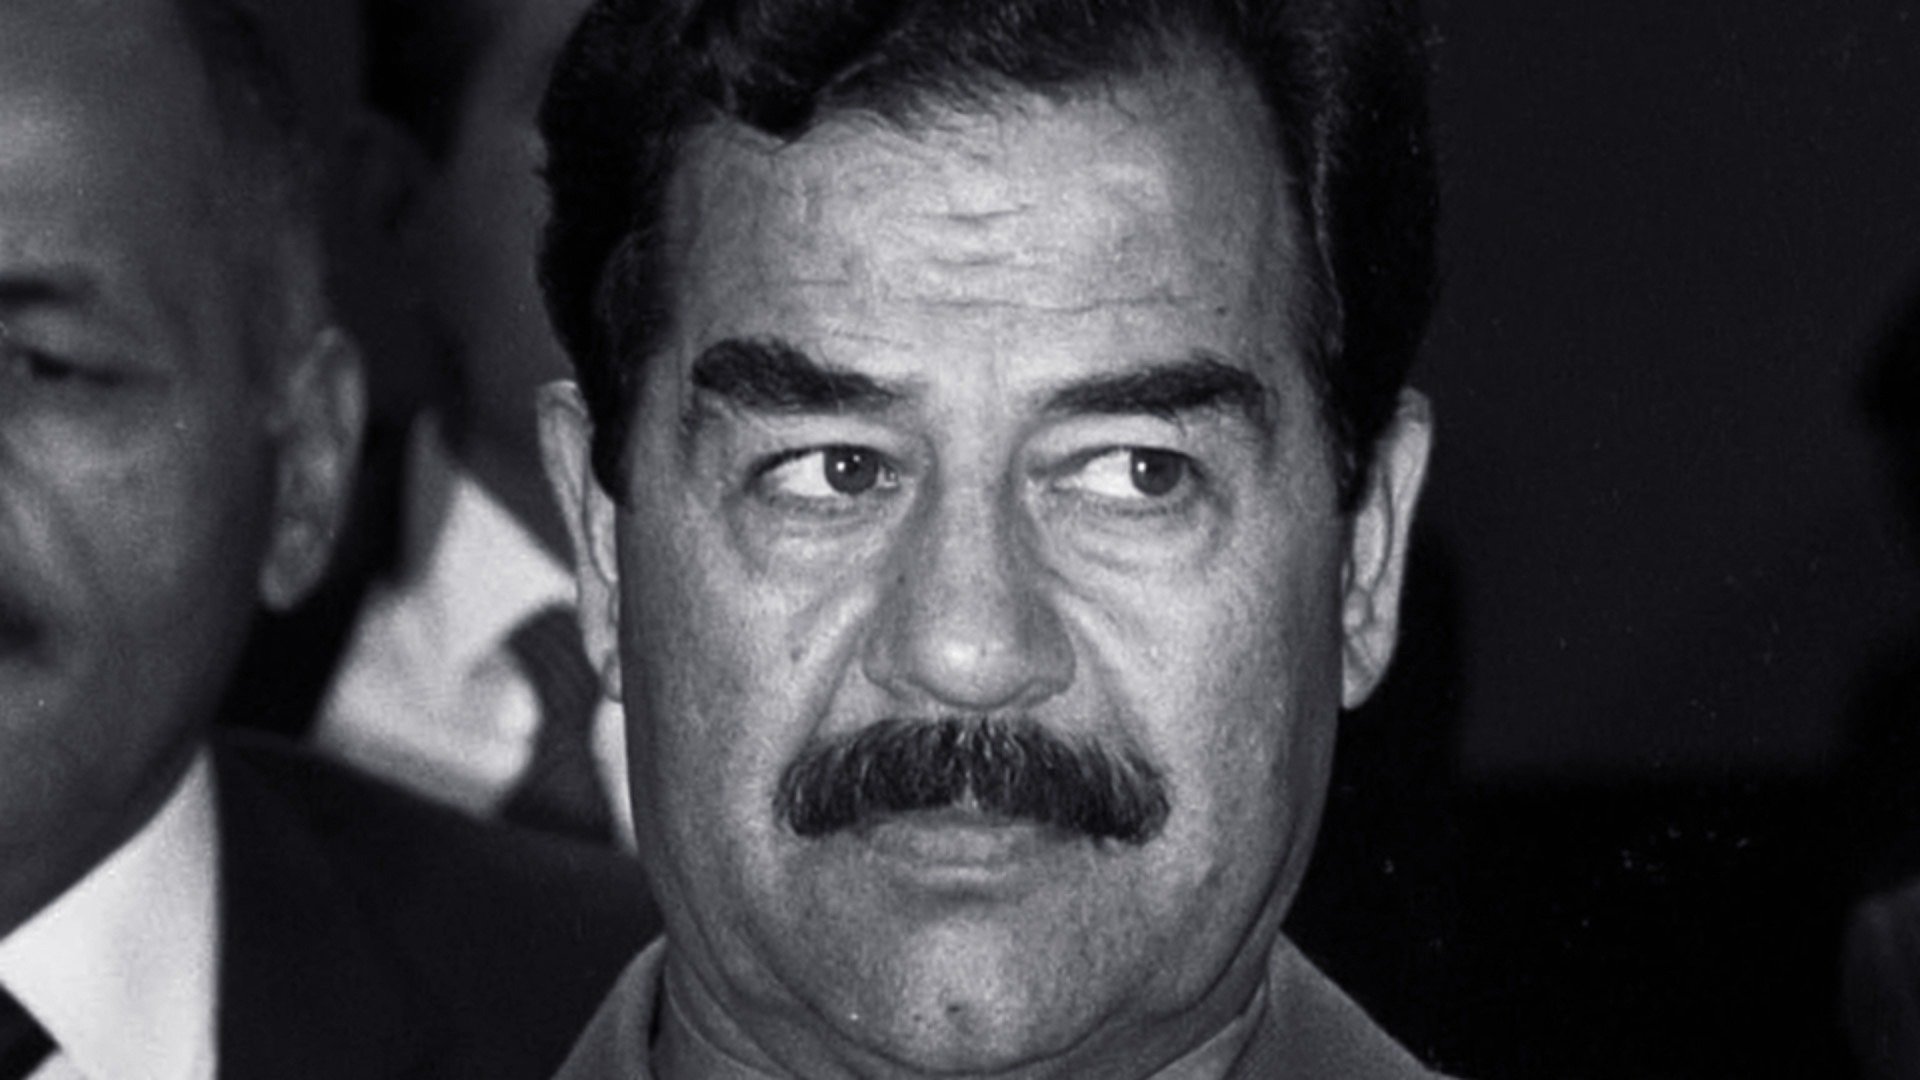 2. Saddam